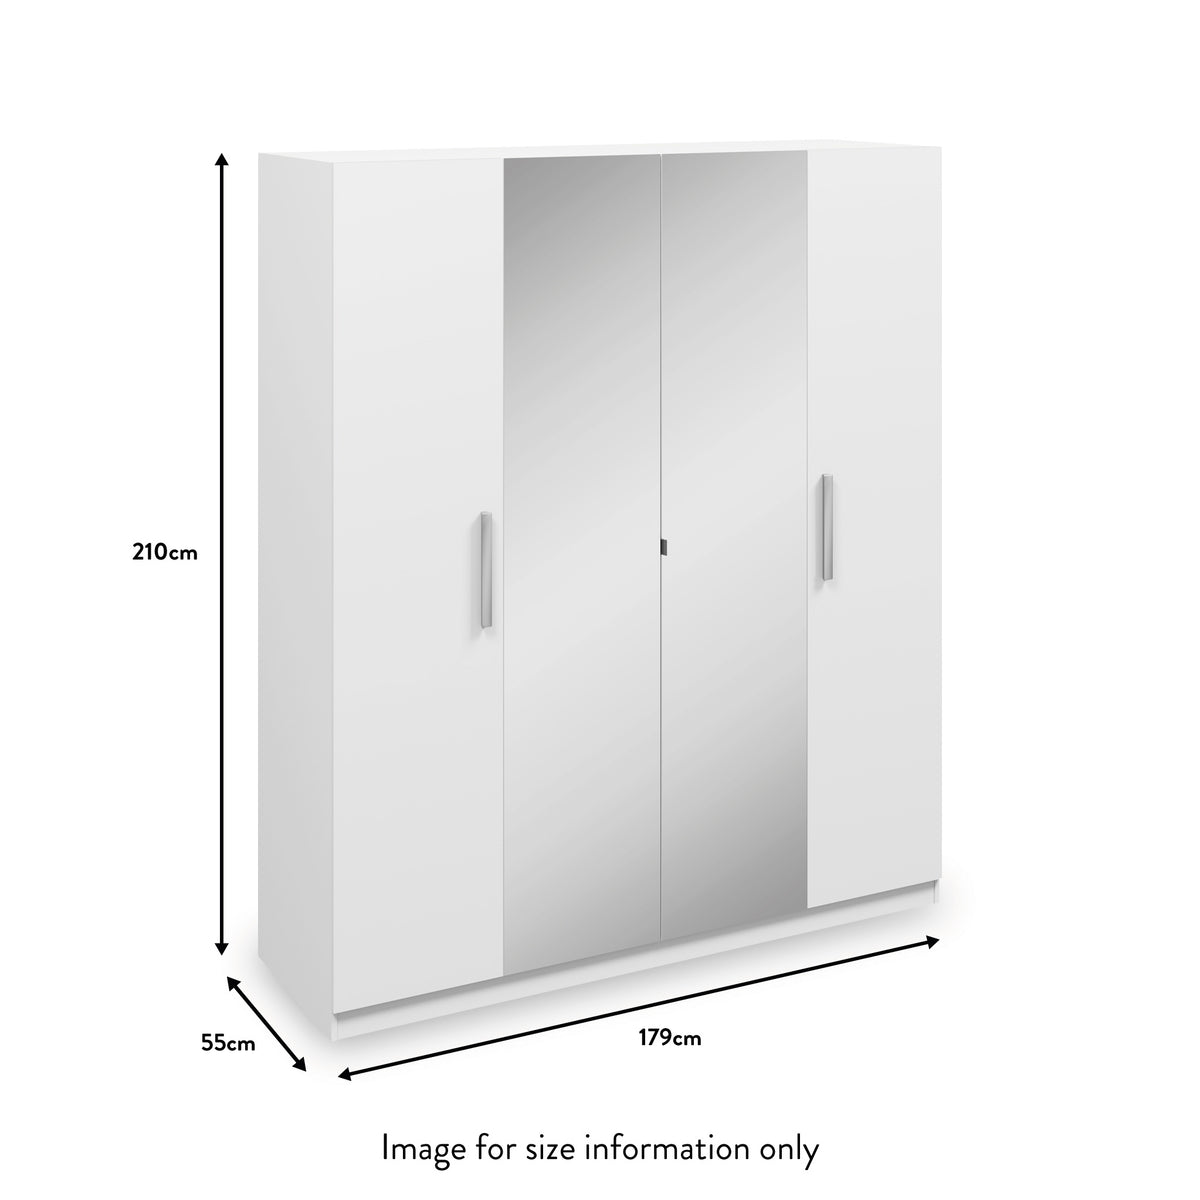 Meribel White 4 Door Mirrored Wardrobe dimensions